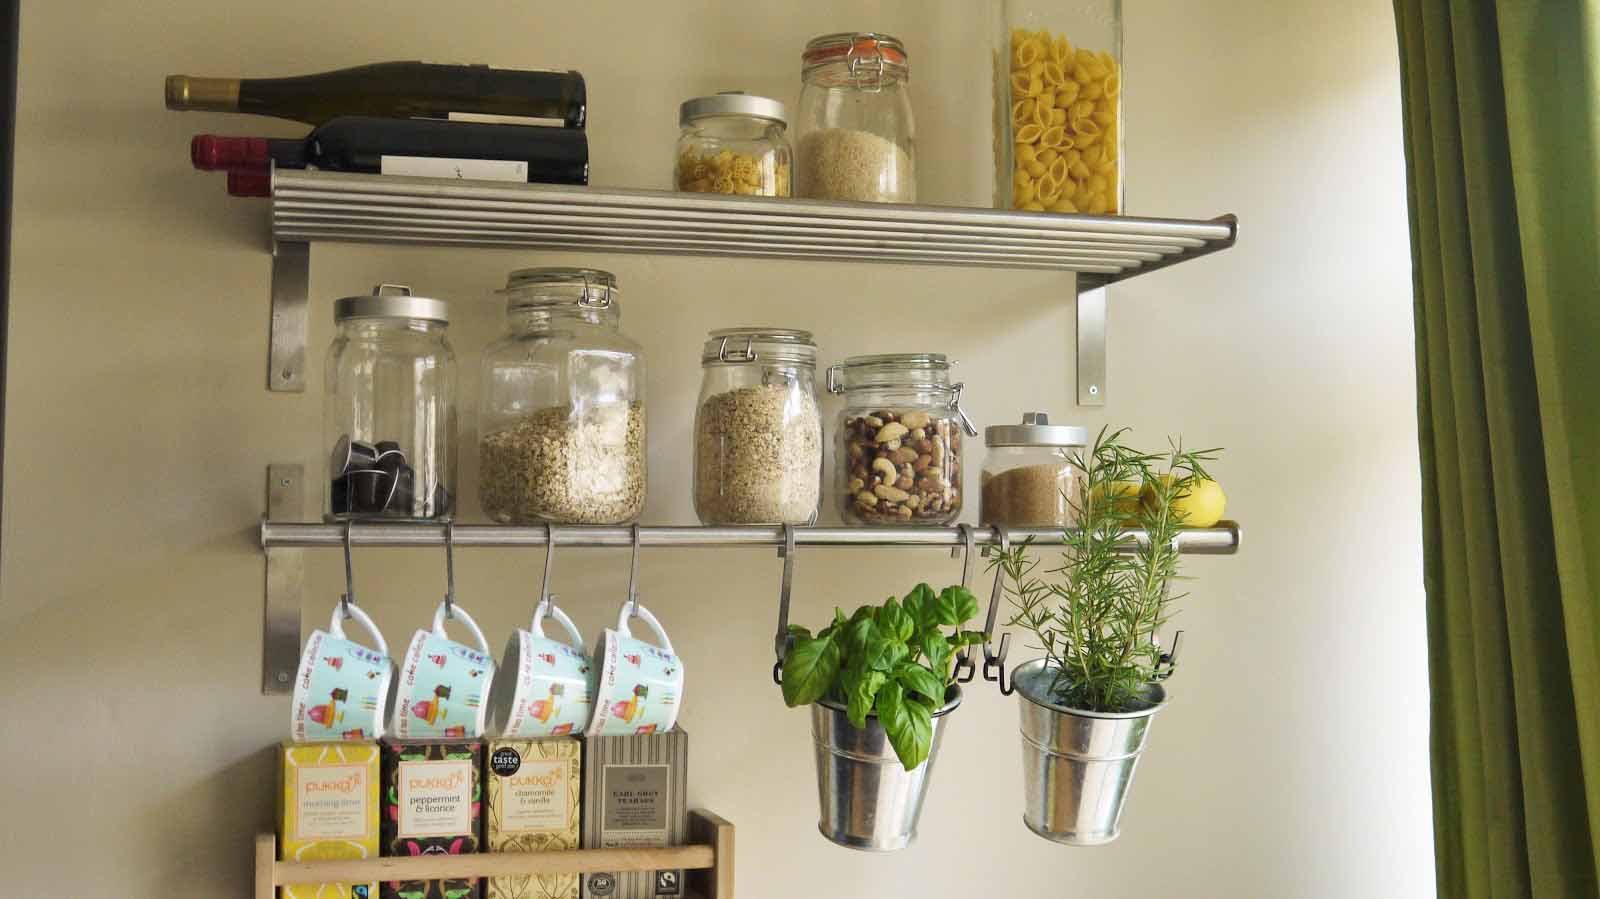 https://www.clutter.com/blog/wp-content/uploads/2016/01/20140006/small-kitchen-storage-shelves-s-hooks.jpg